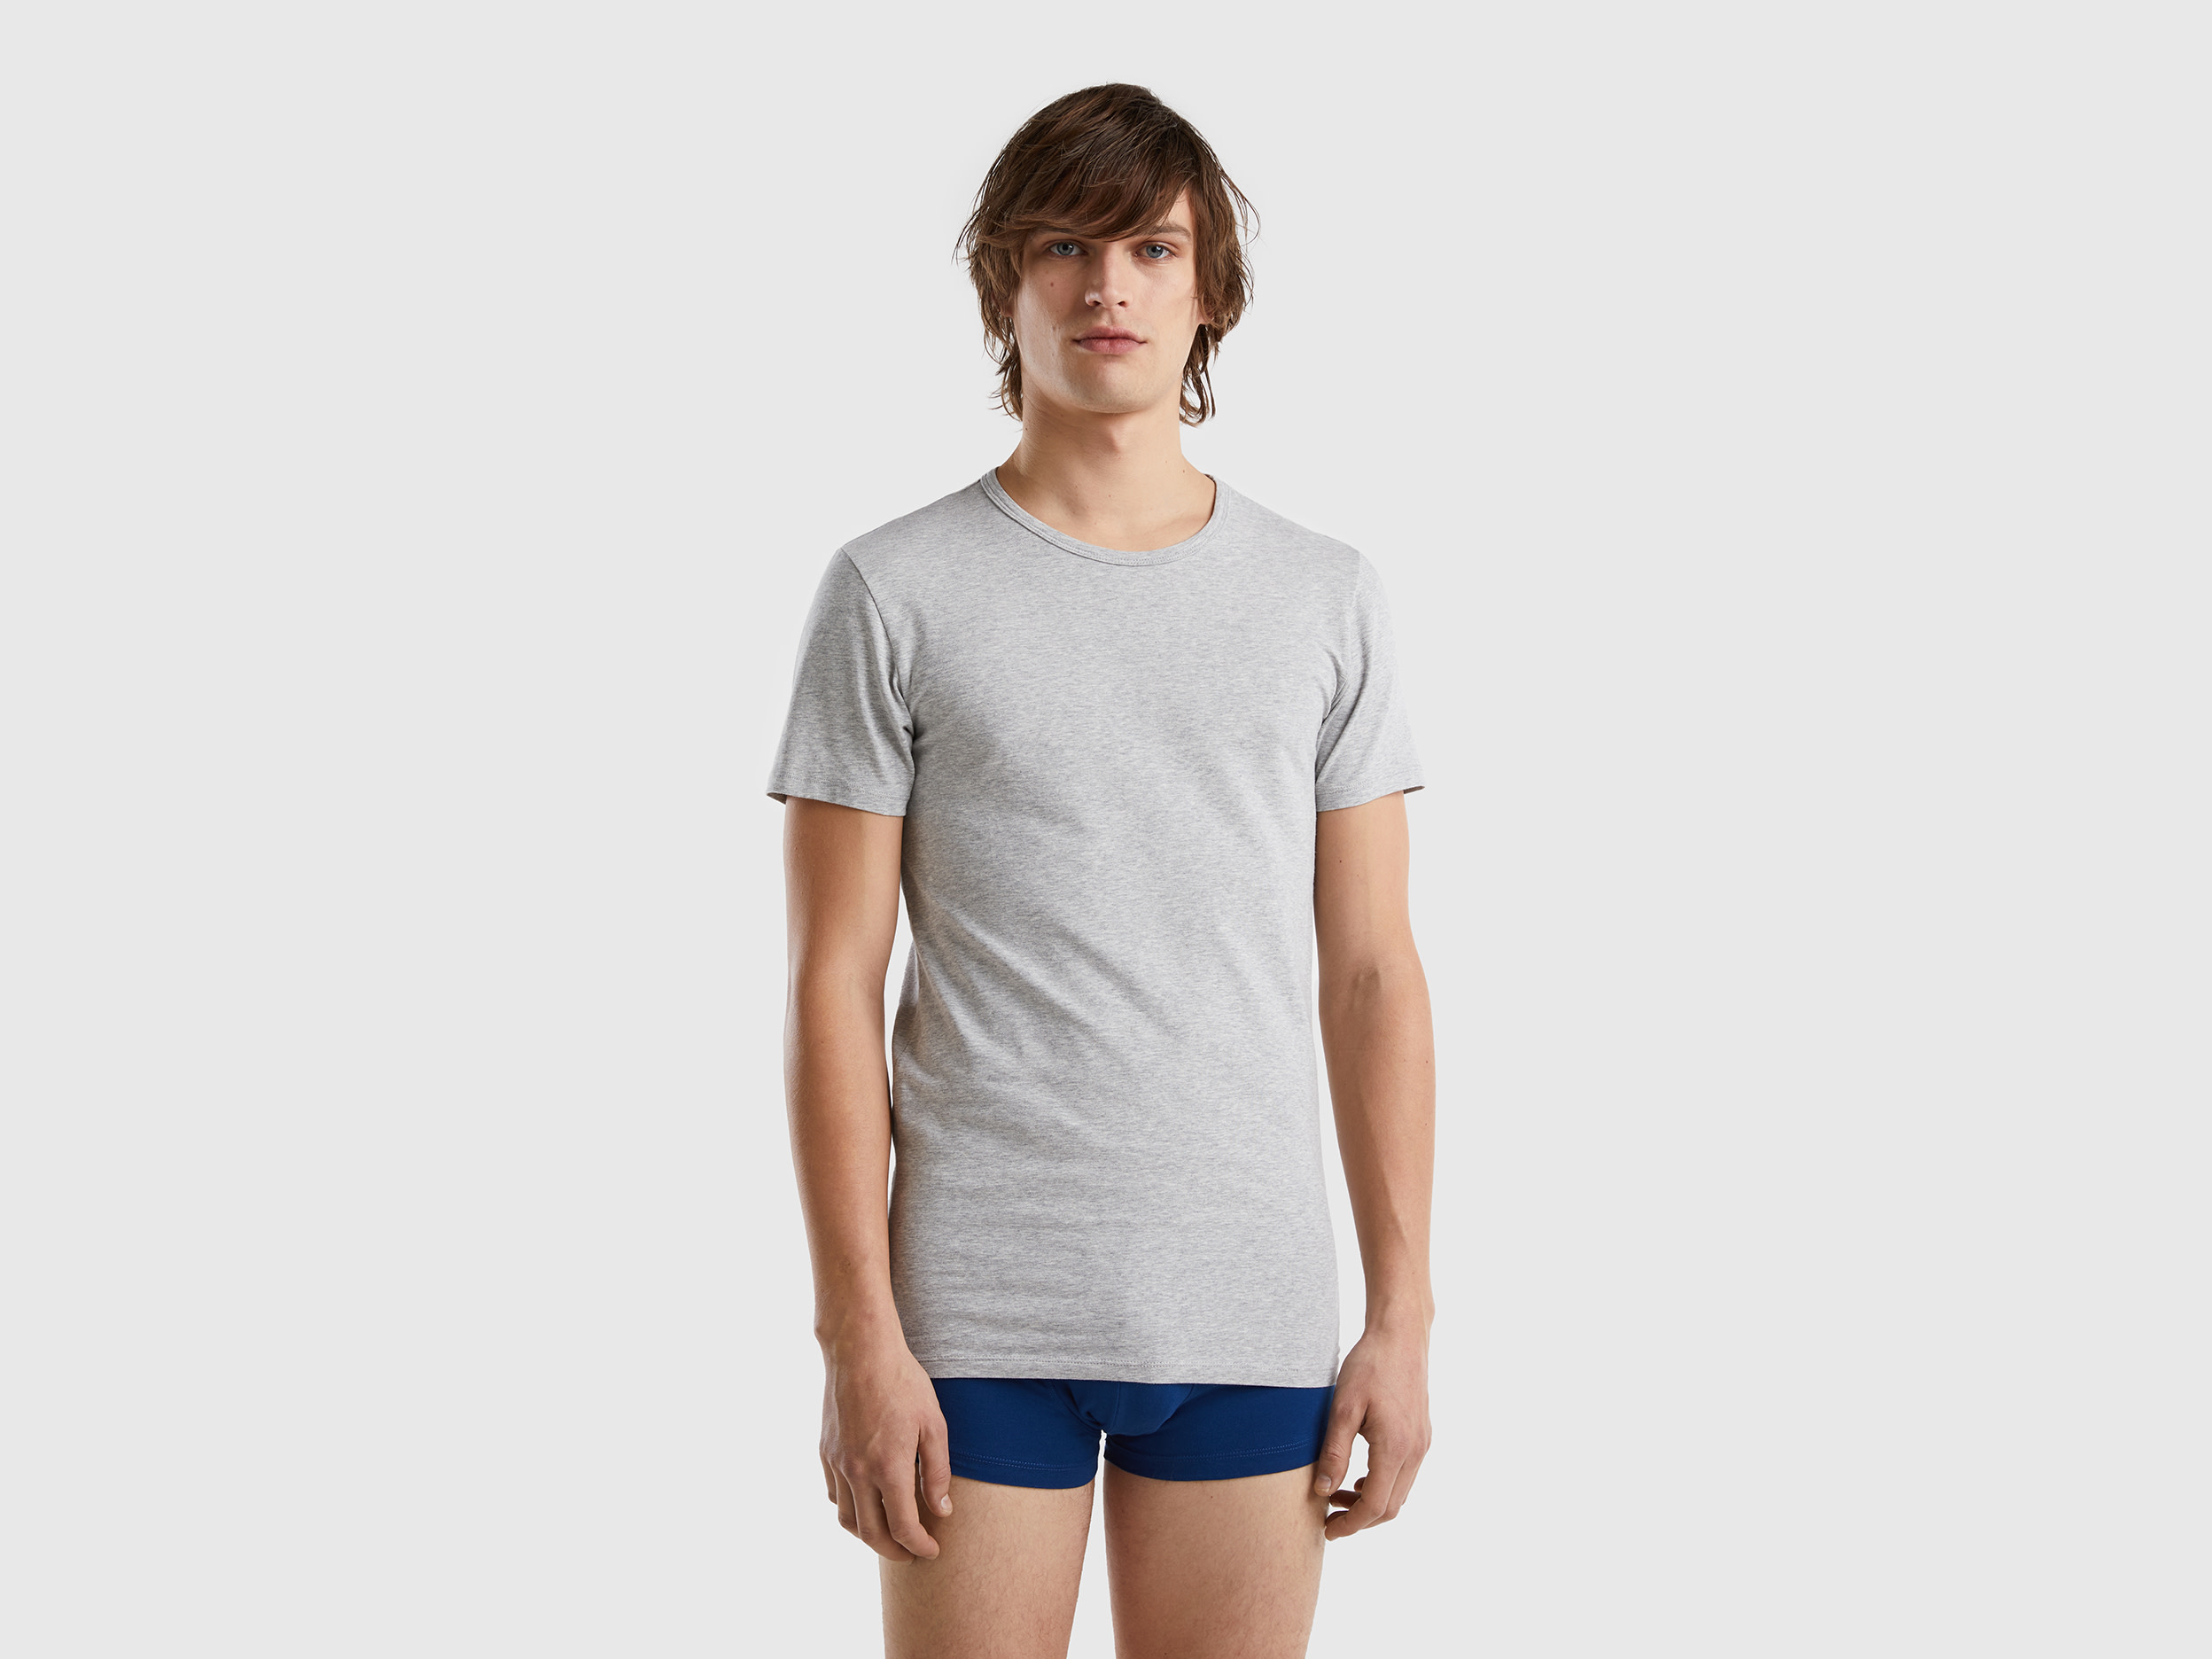 Benetton, Organic Stretch Cotton T-shirt, size L, Light Gray, Men